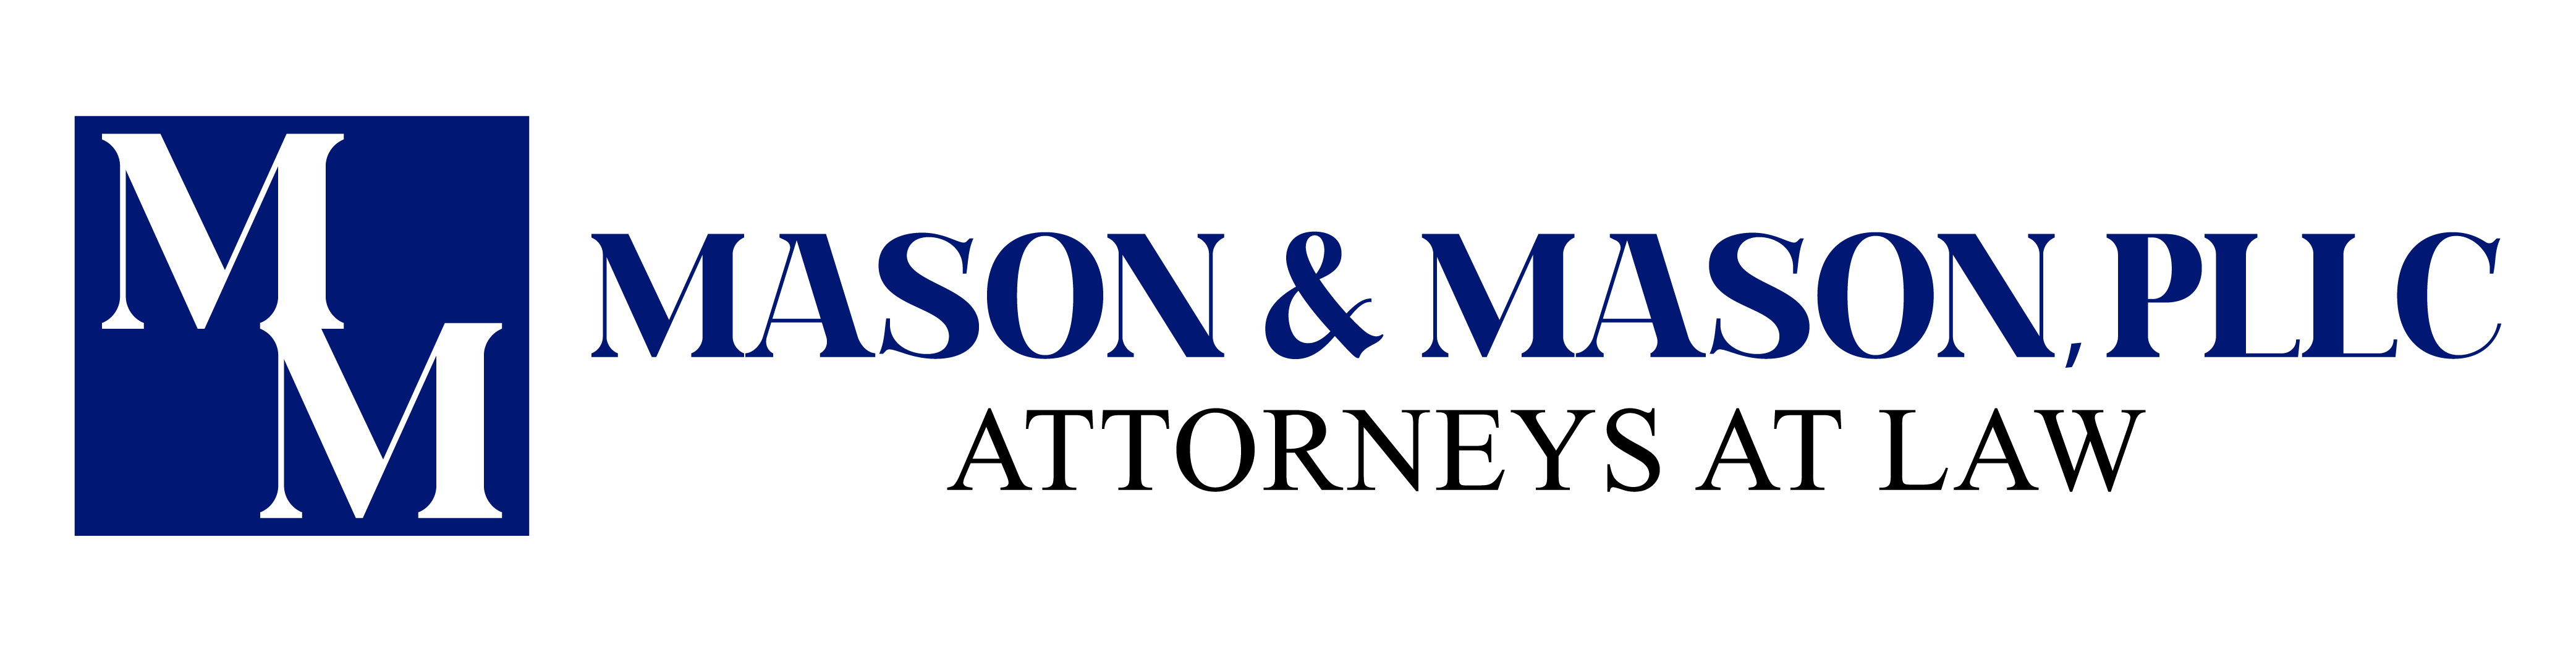 MASON & MASON, PLLC - MASON & MASON, PLLC